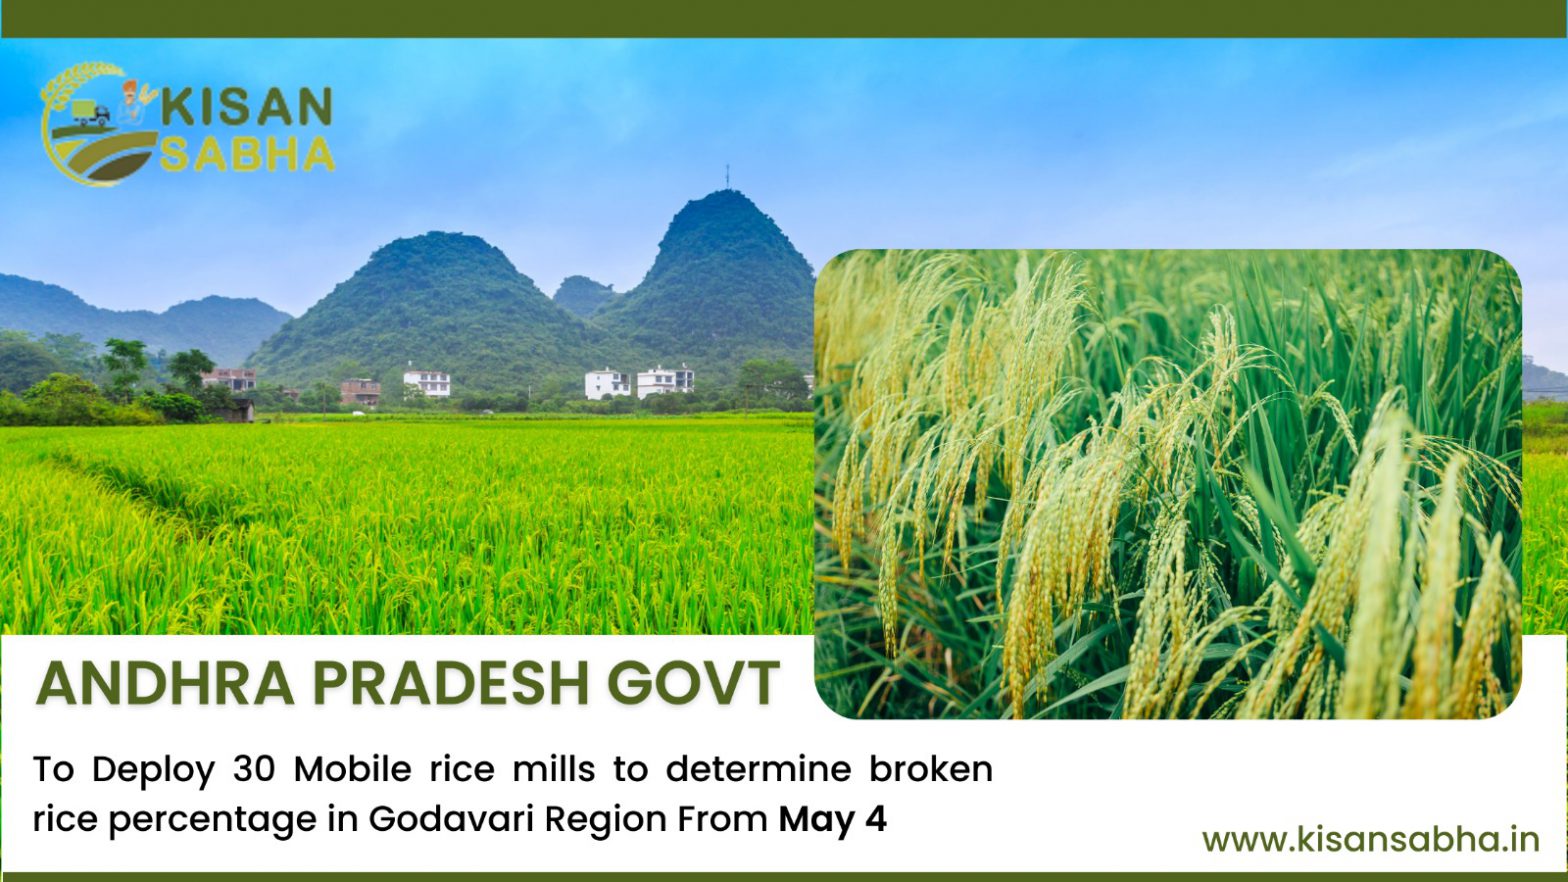 Andhra Pradesh govt. to deploy 30 mobile rice mills to determine broken rice percentage in Godavari region from May 4